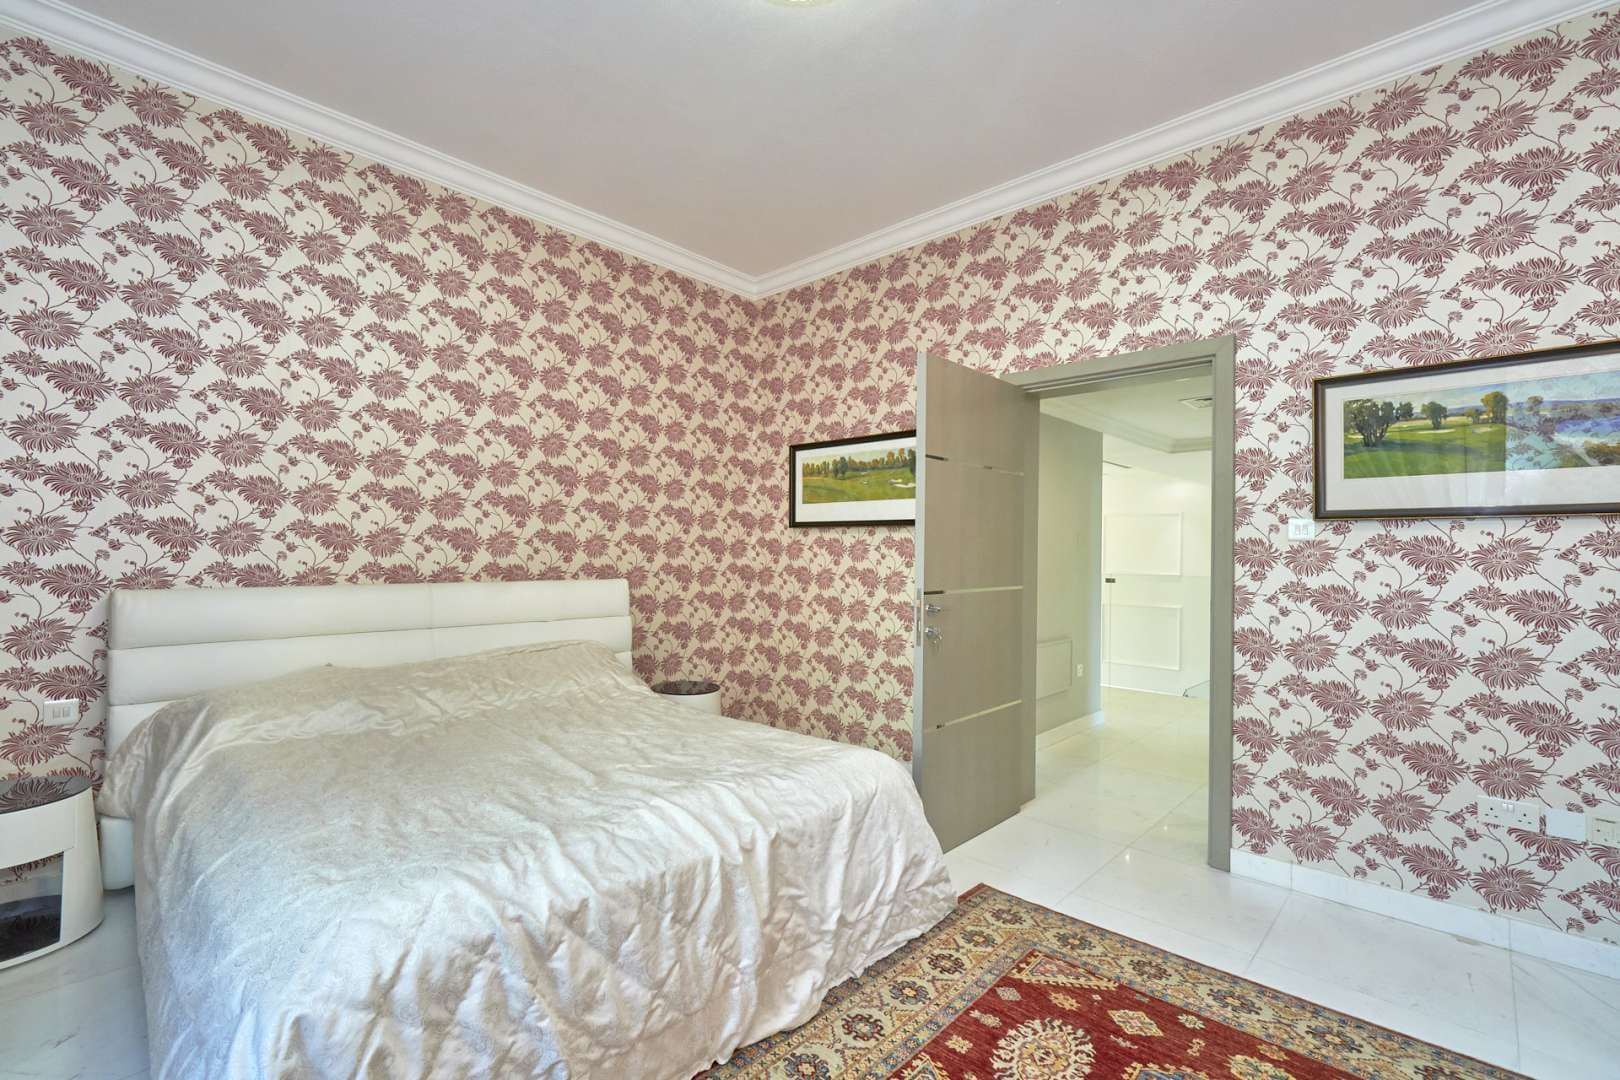 5 Bedroom Villa For Sale Mediterranean Clusters Lp06720 23648dbac695d400.jpg